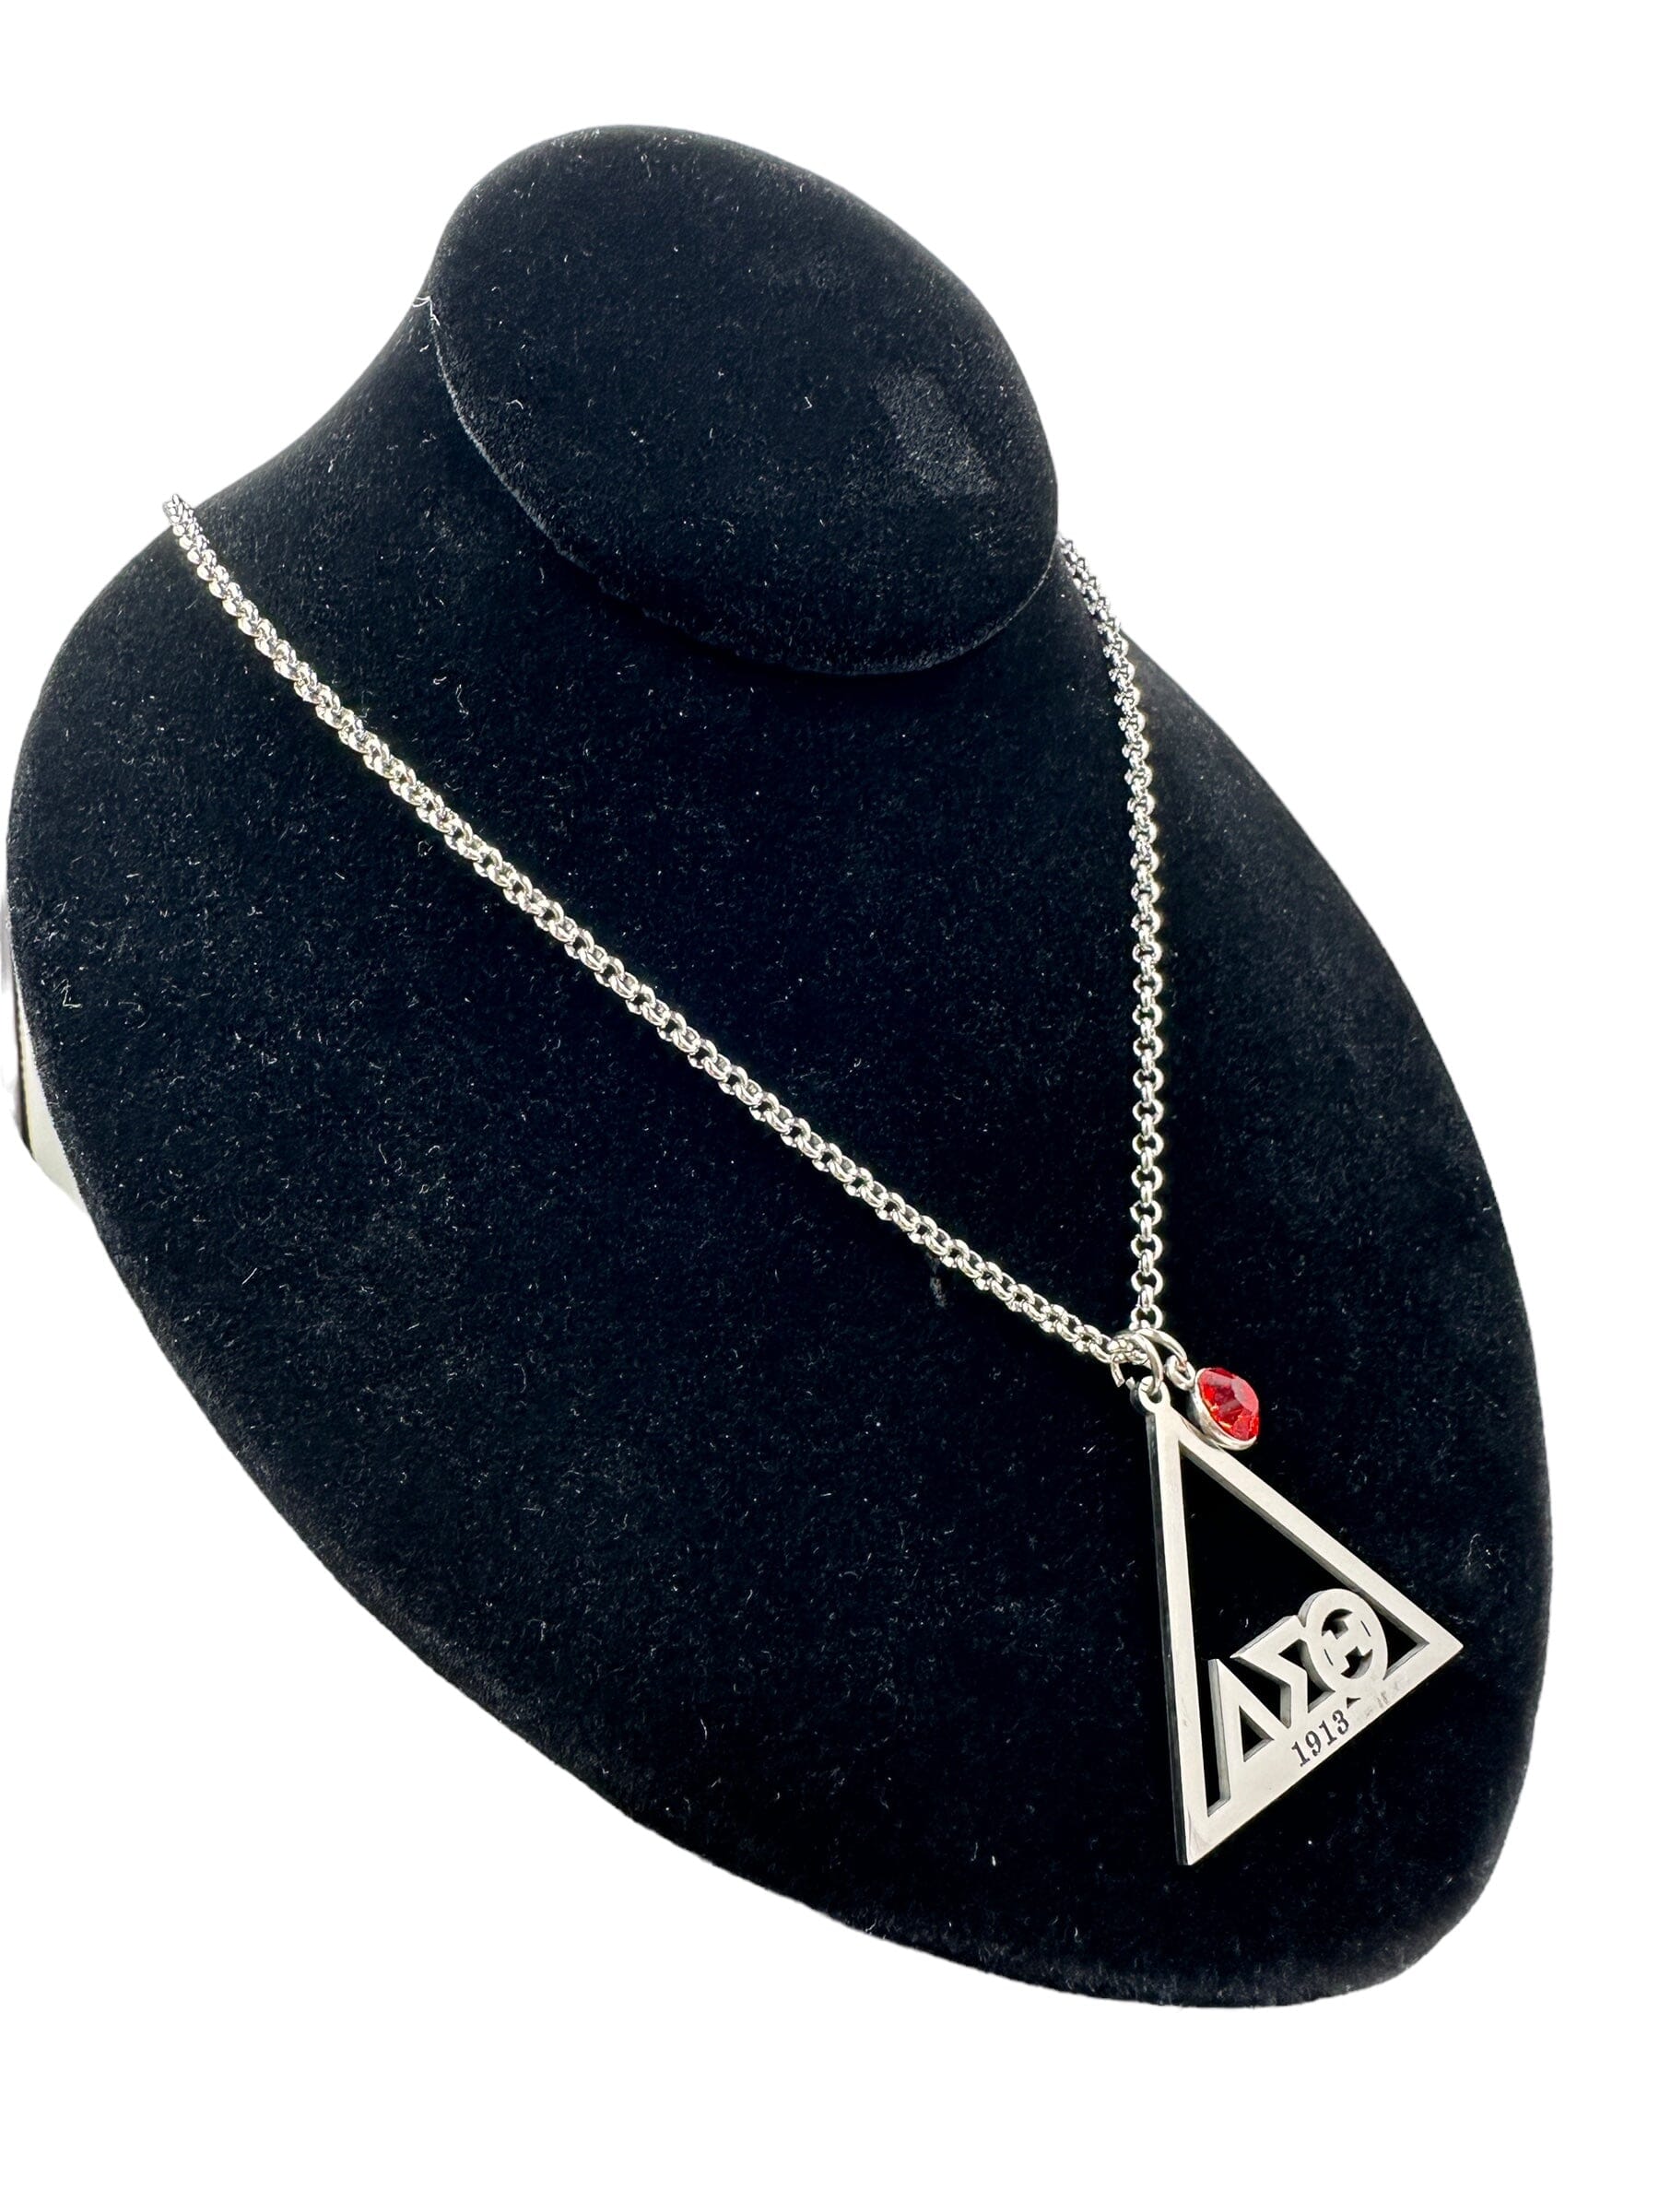 Delta Sigma Theta Stainless Steel Triangle Red CZ Pendant Necklaces Trendzio Jewelry 